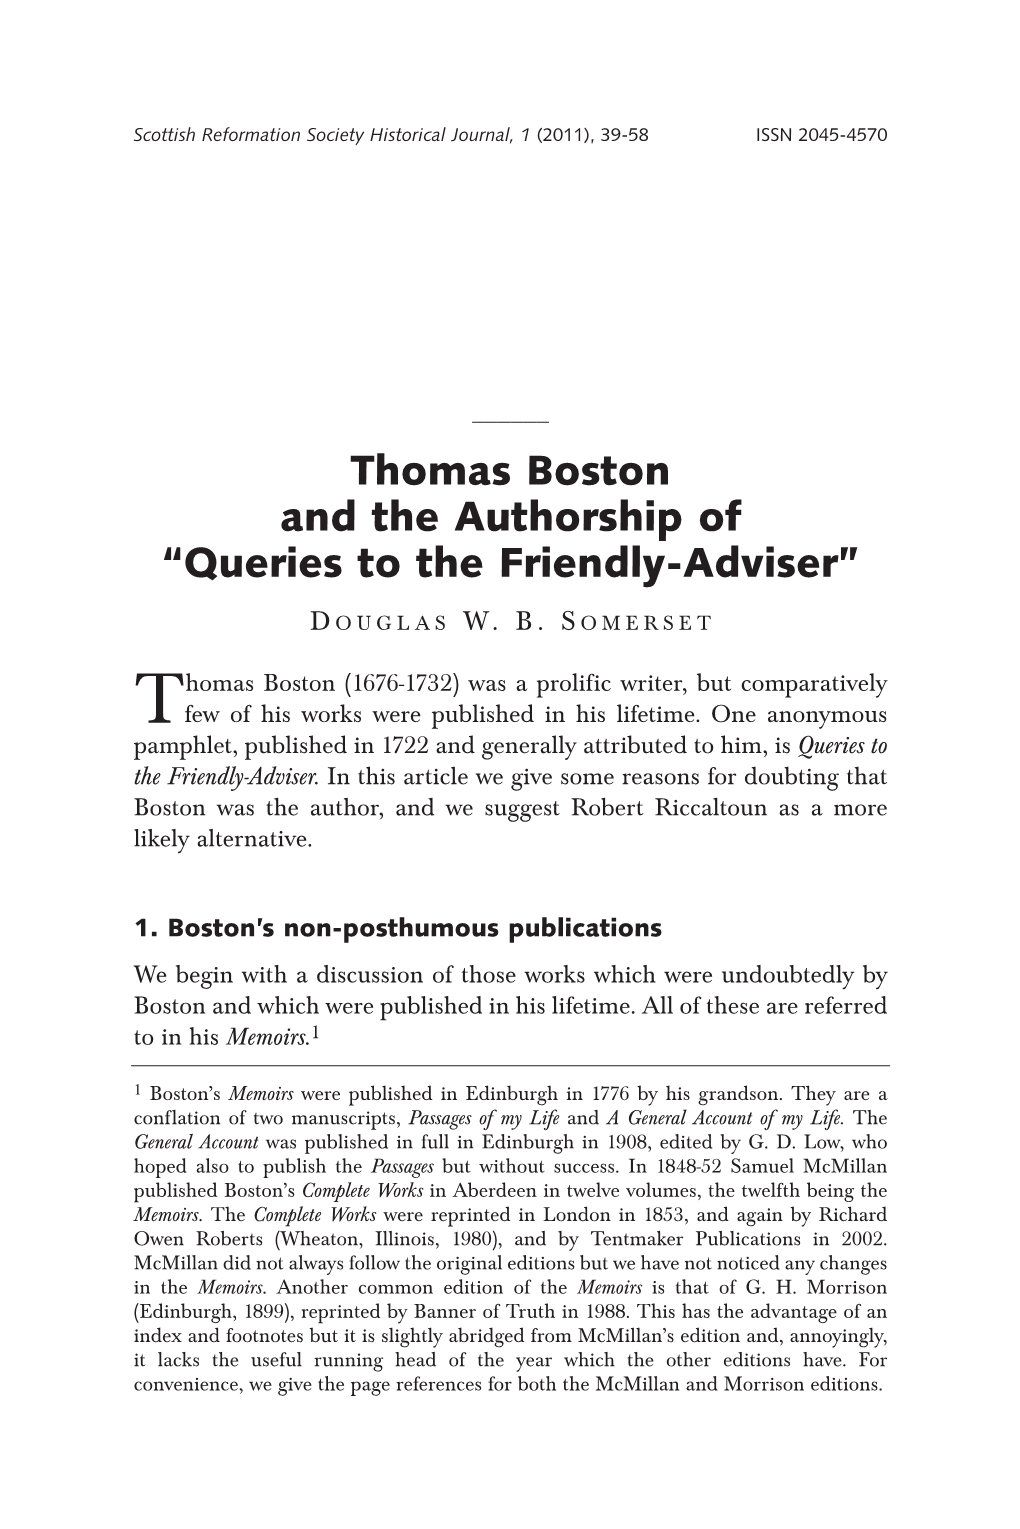 Thomas Boston and the Authorship of “Queries to the Friendly-Adviser”